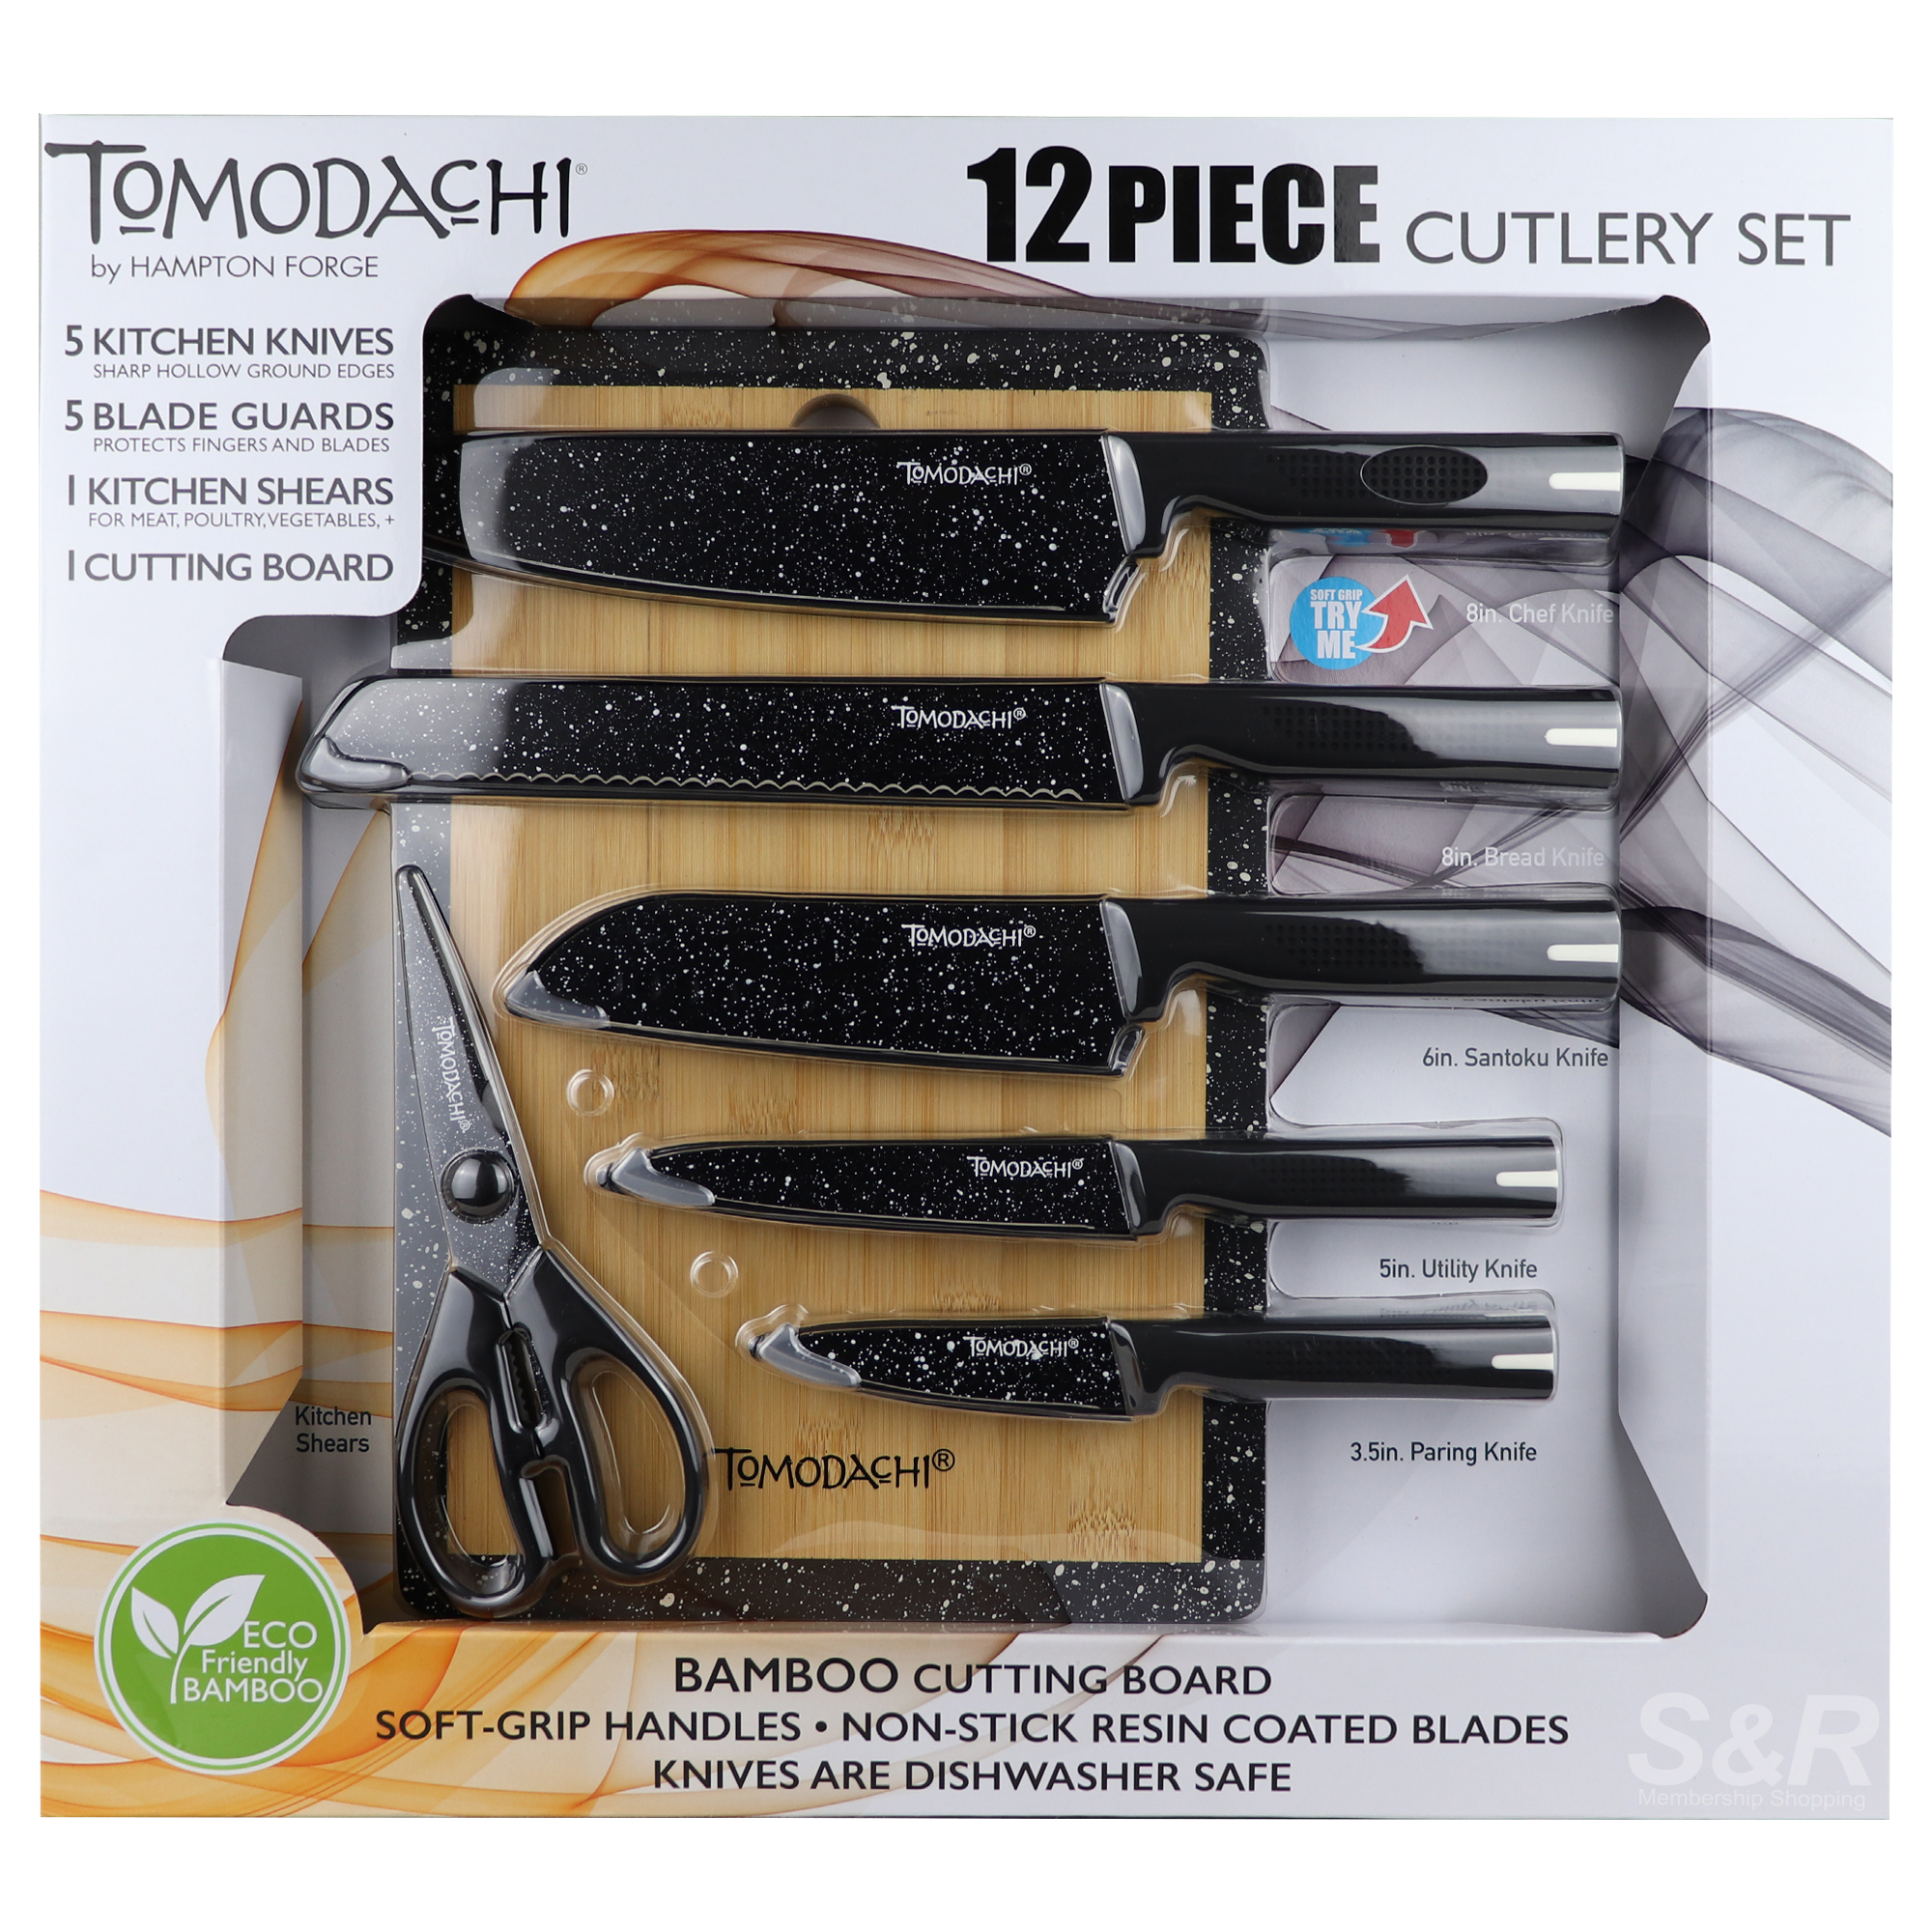 Tomadachi by Hampton Forge 12pc Cutlery Set